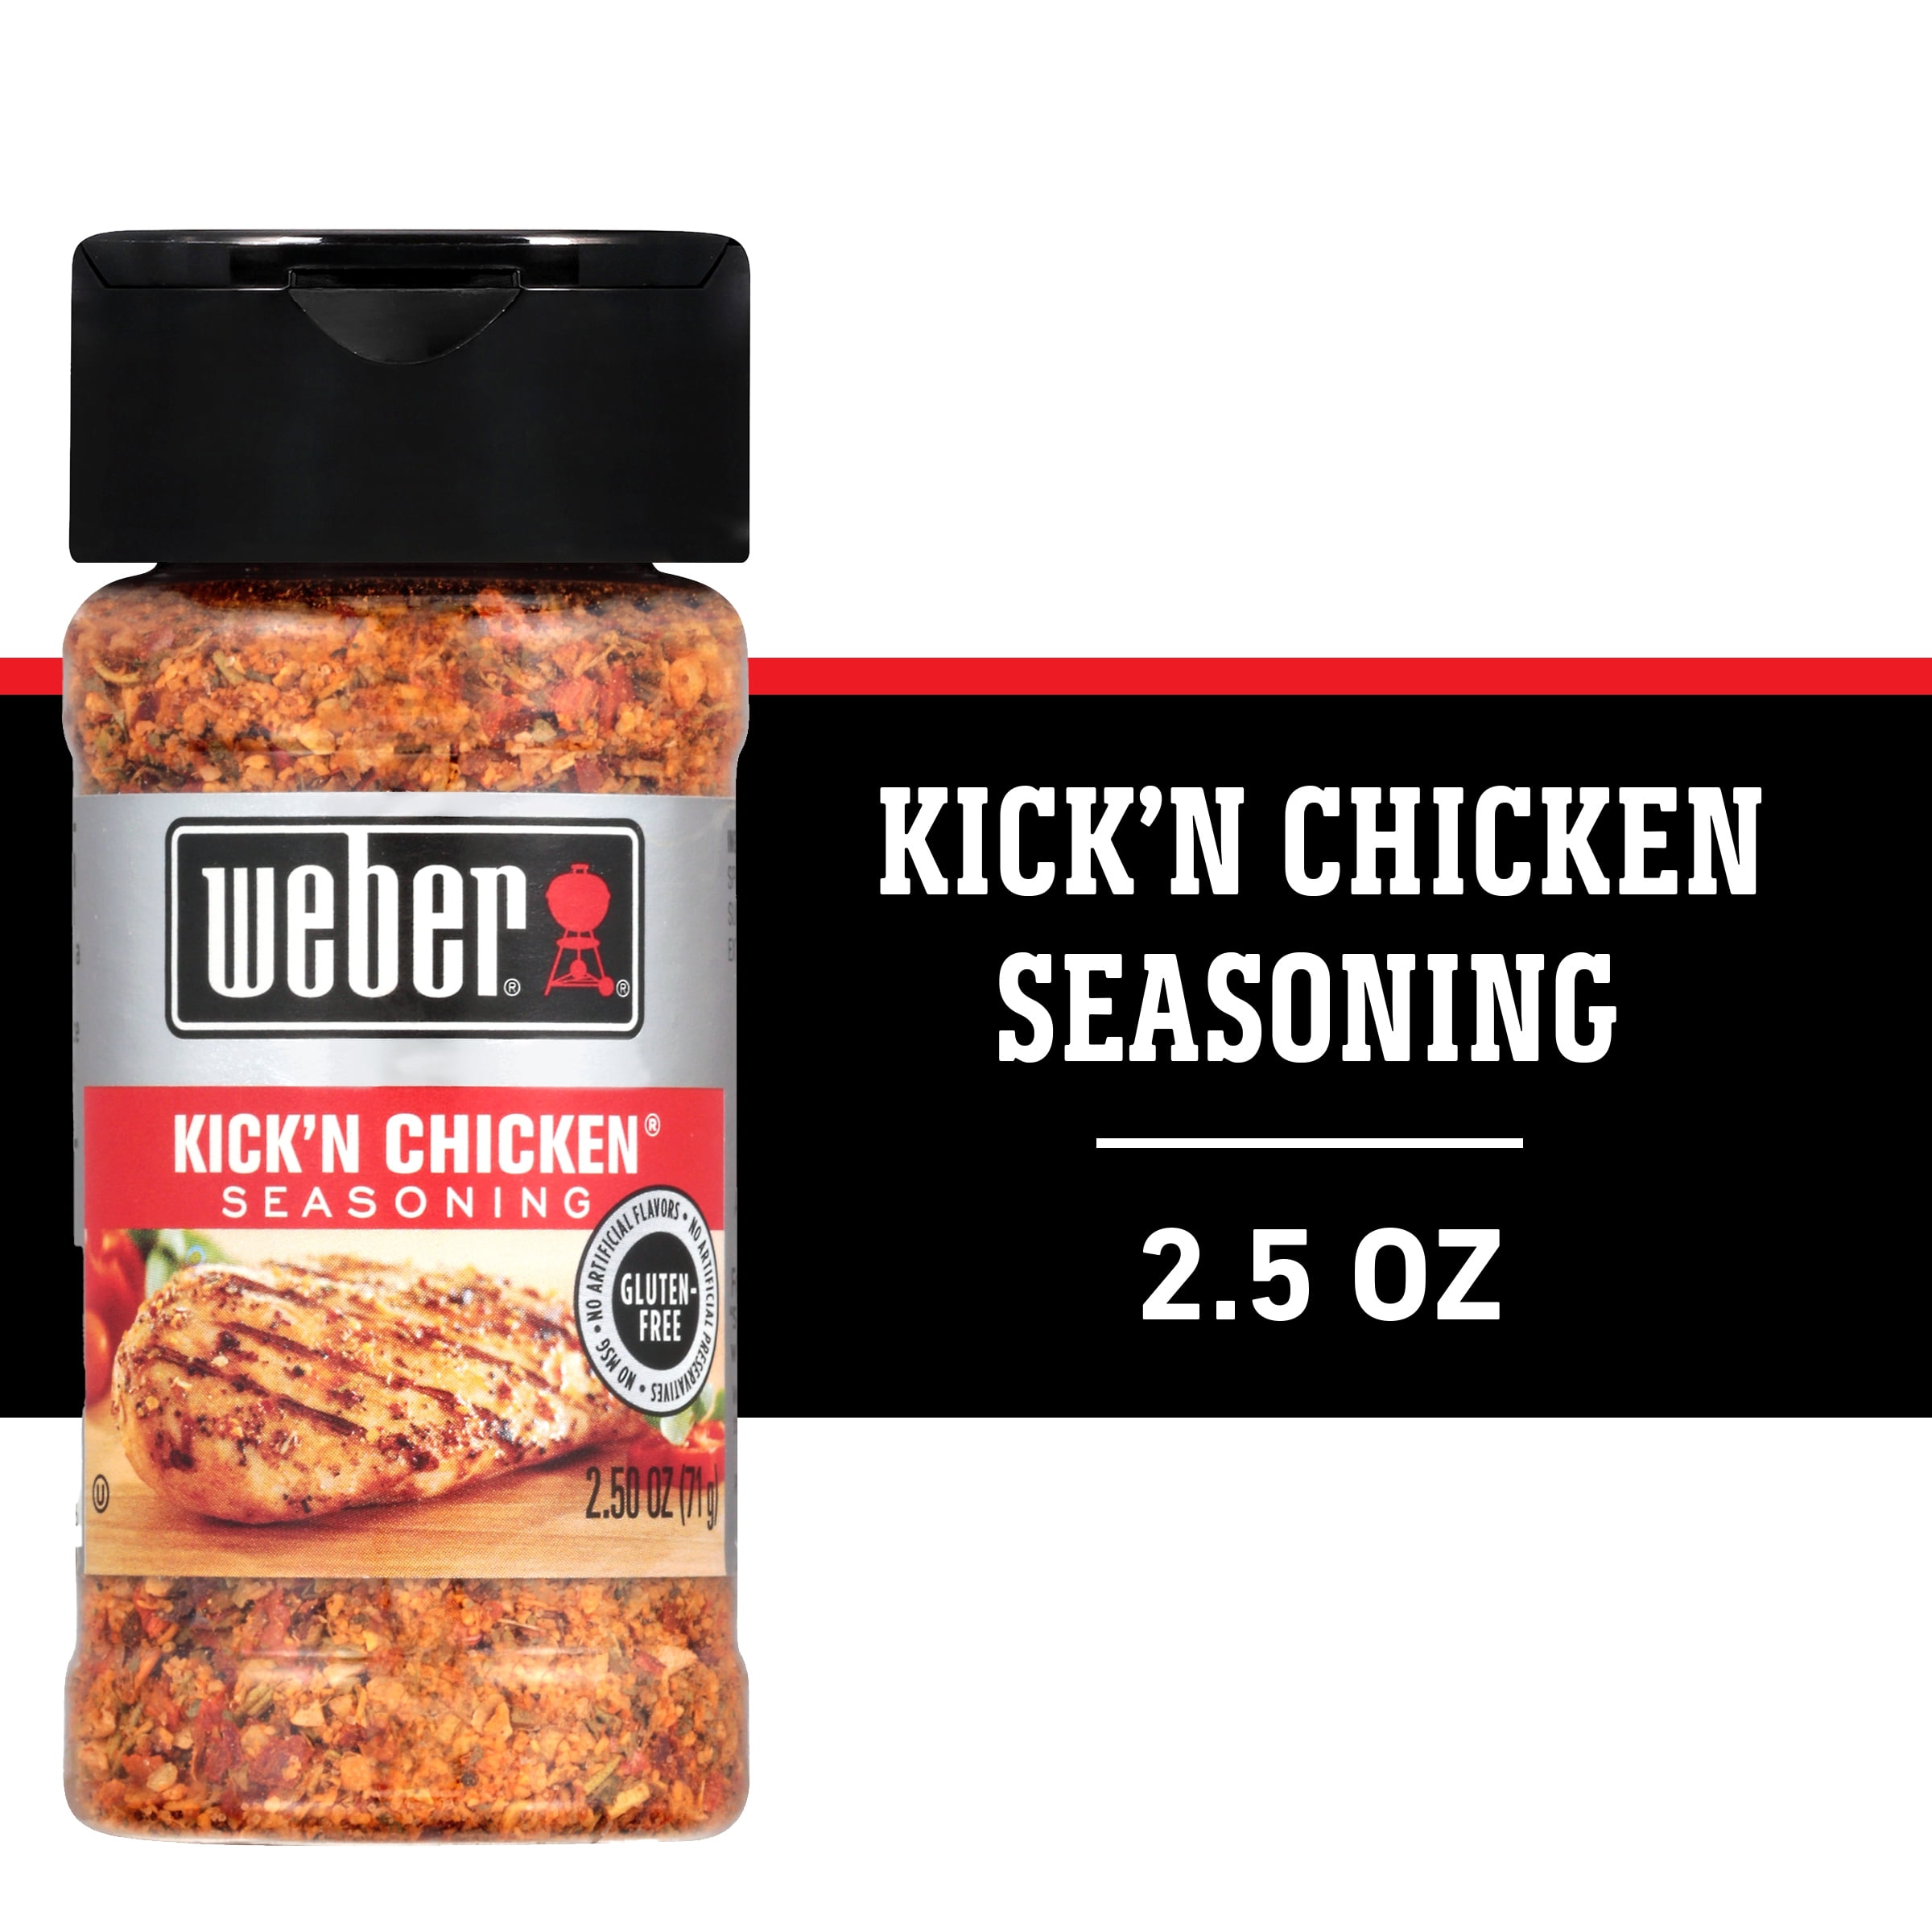 Norton Farms Kickin Chicken Seasoning – The Berry Patch